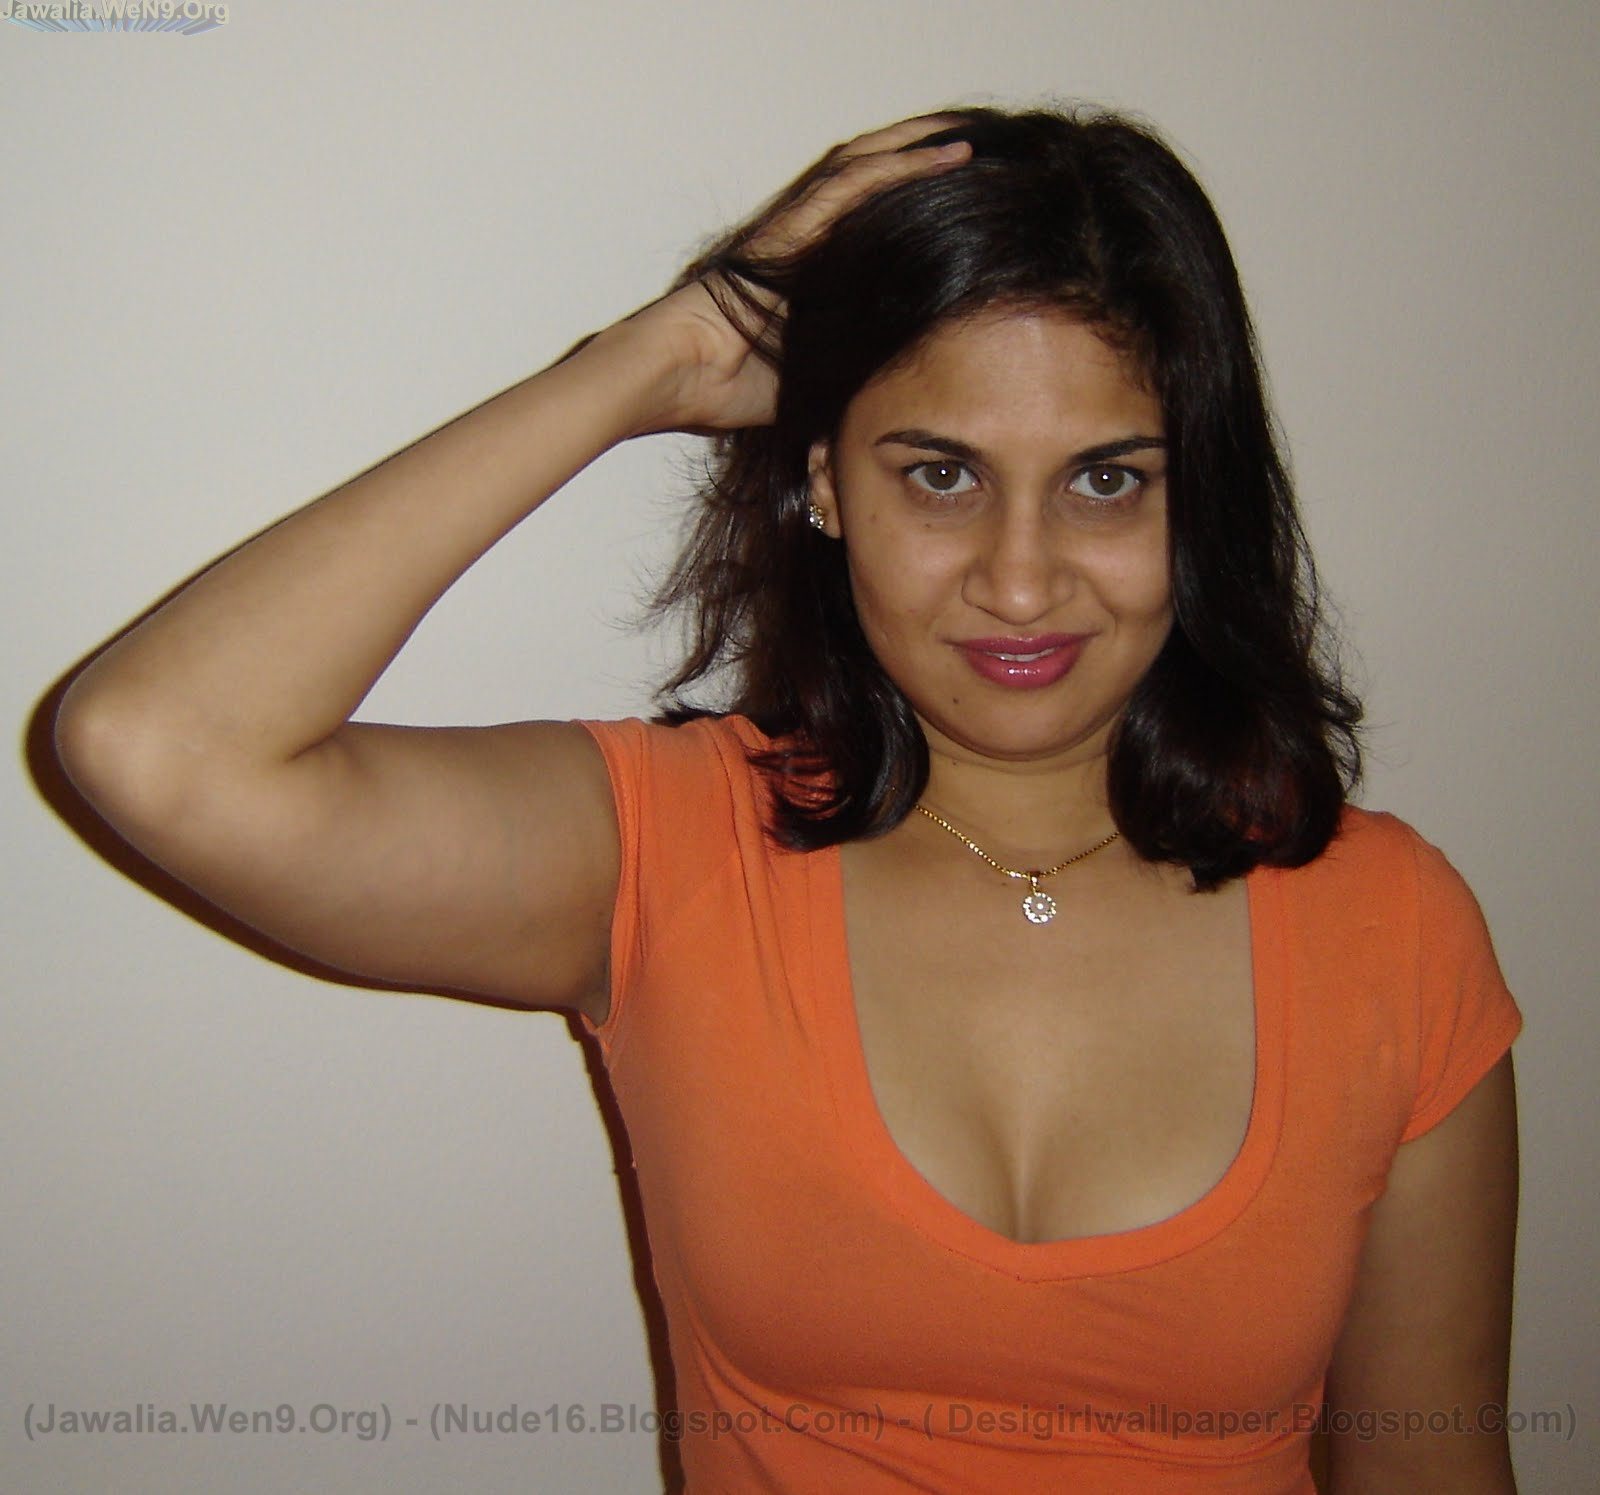 Real desi girls in sexy pose - Indian Hot Girls.